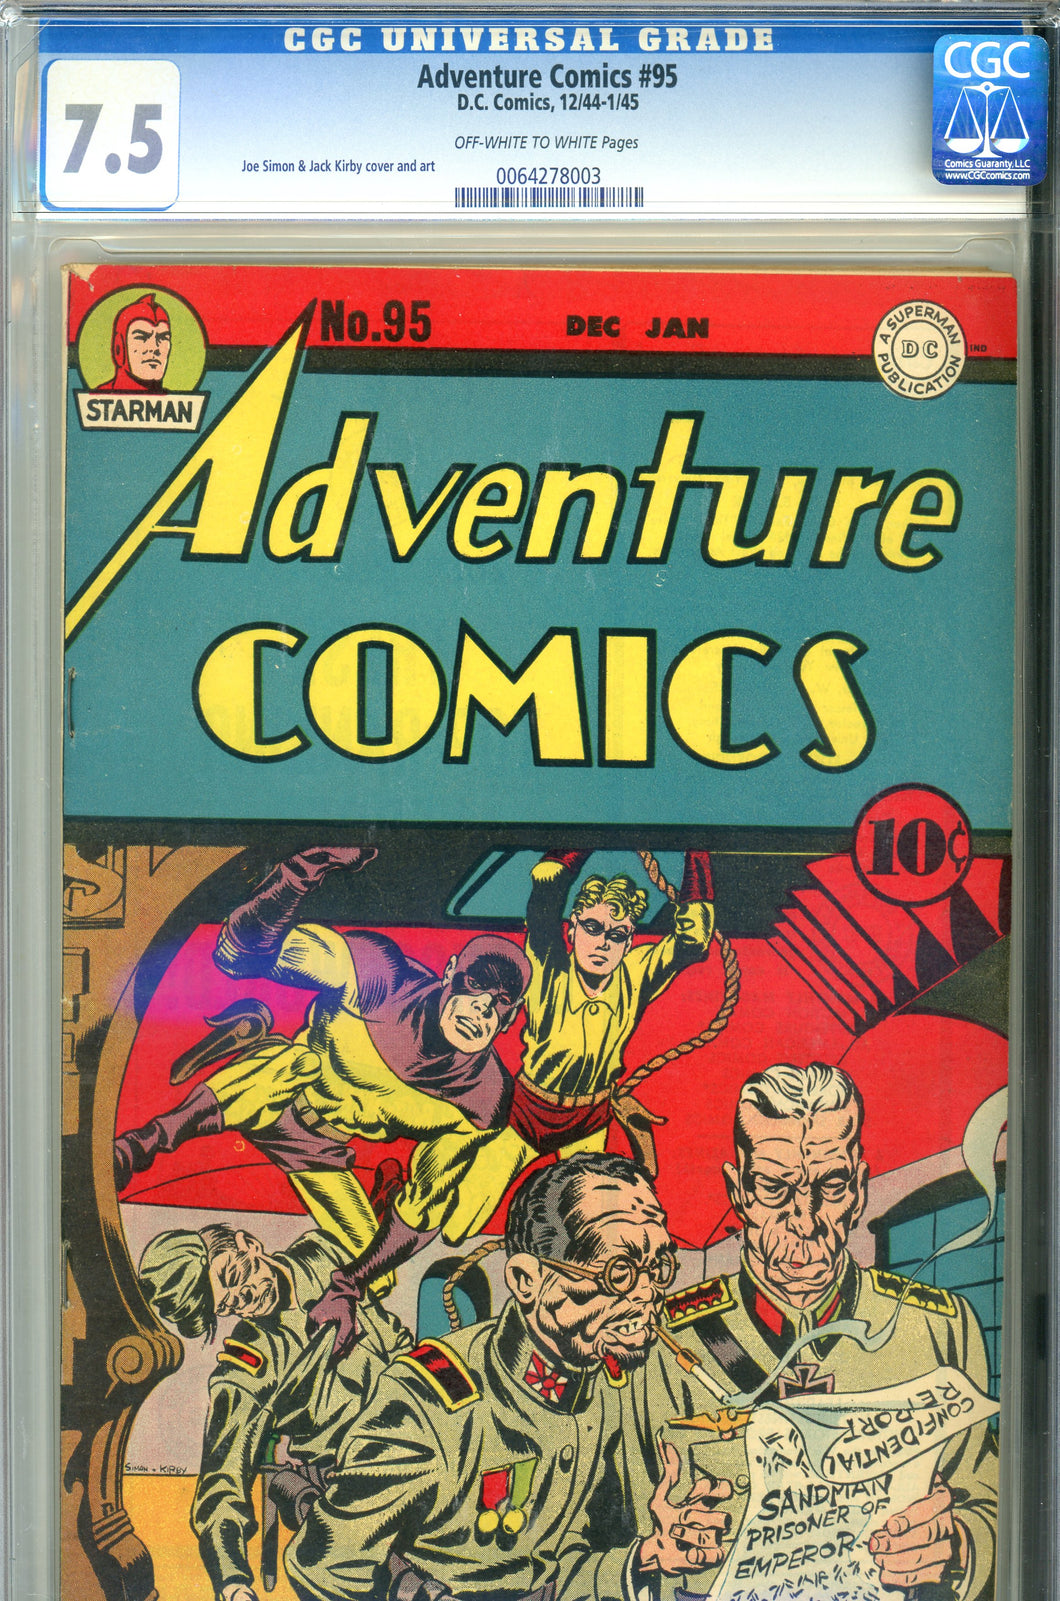 Adventure Comics #95 WWII Cover CGC 7.5